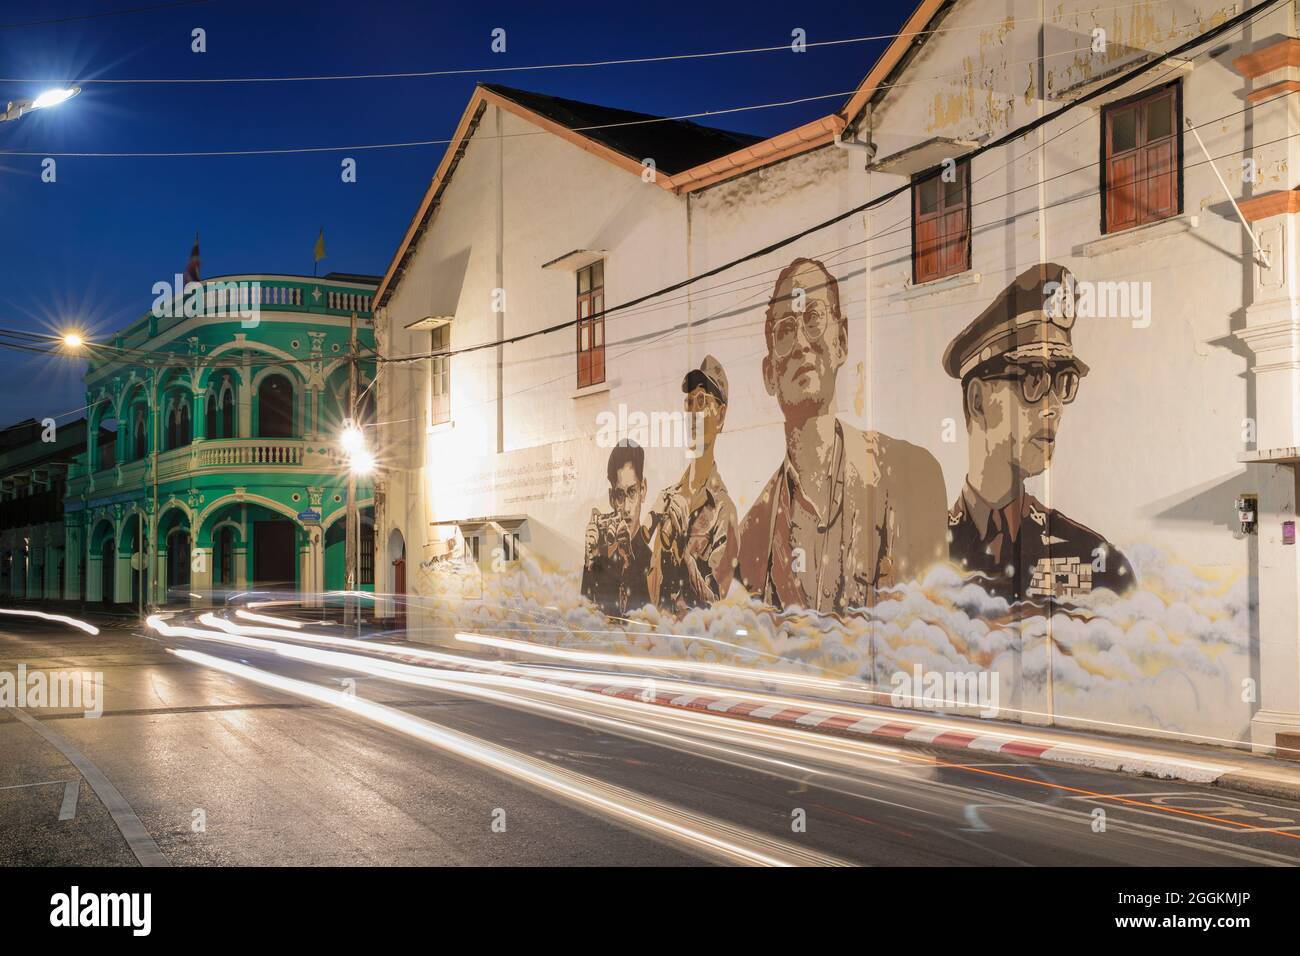 Street Art con King Thai, architettura coloniale portoghese nella città vecchia di Phuket, Phuket, Thailandia Foto Stock